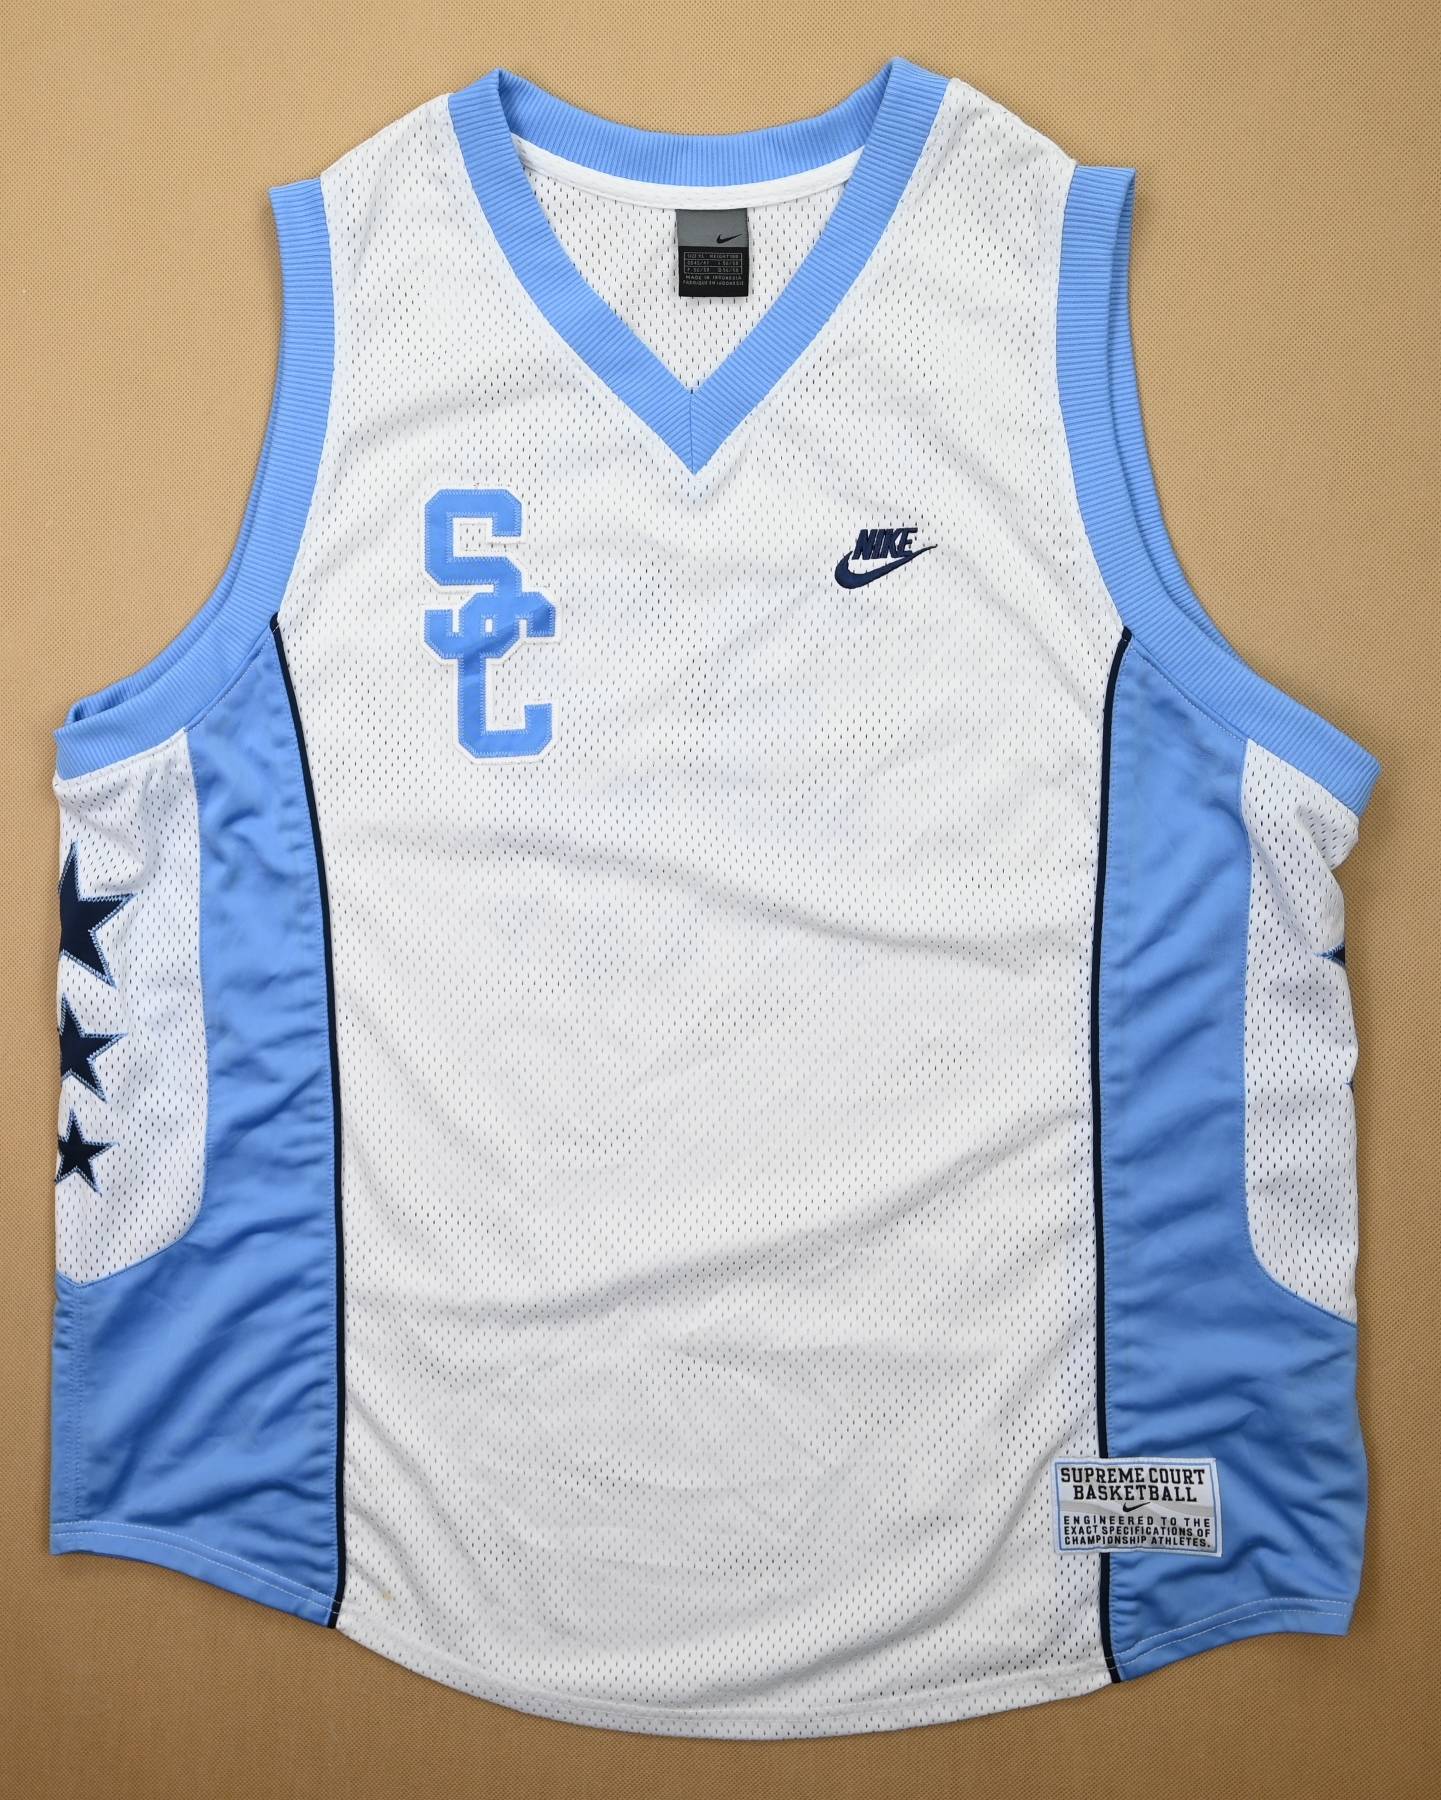 Nike Supreme Court Basketball Shirt XL XL